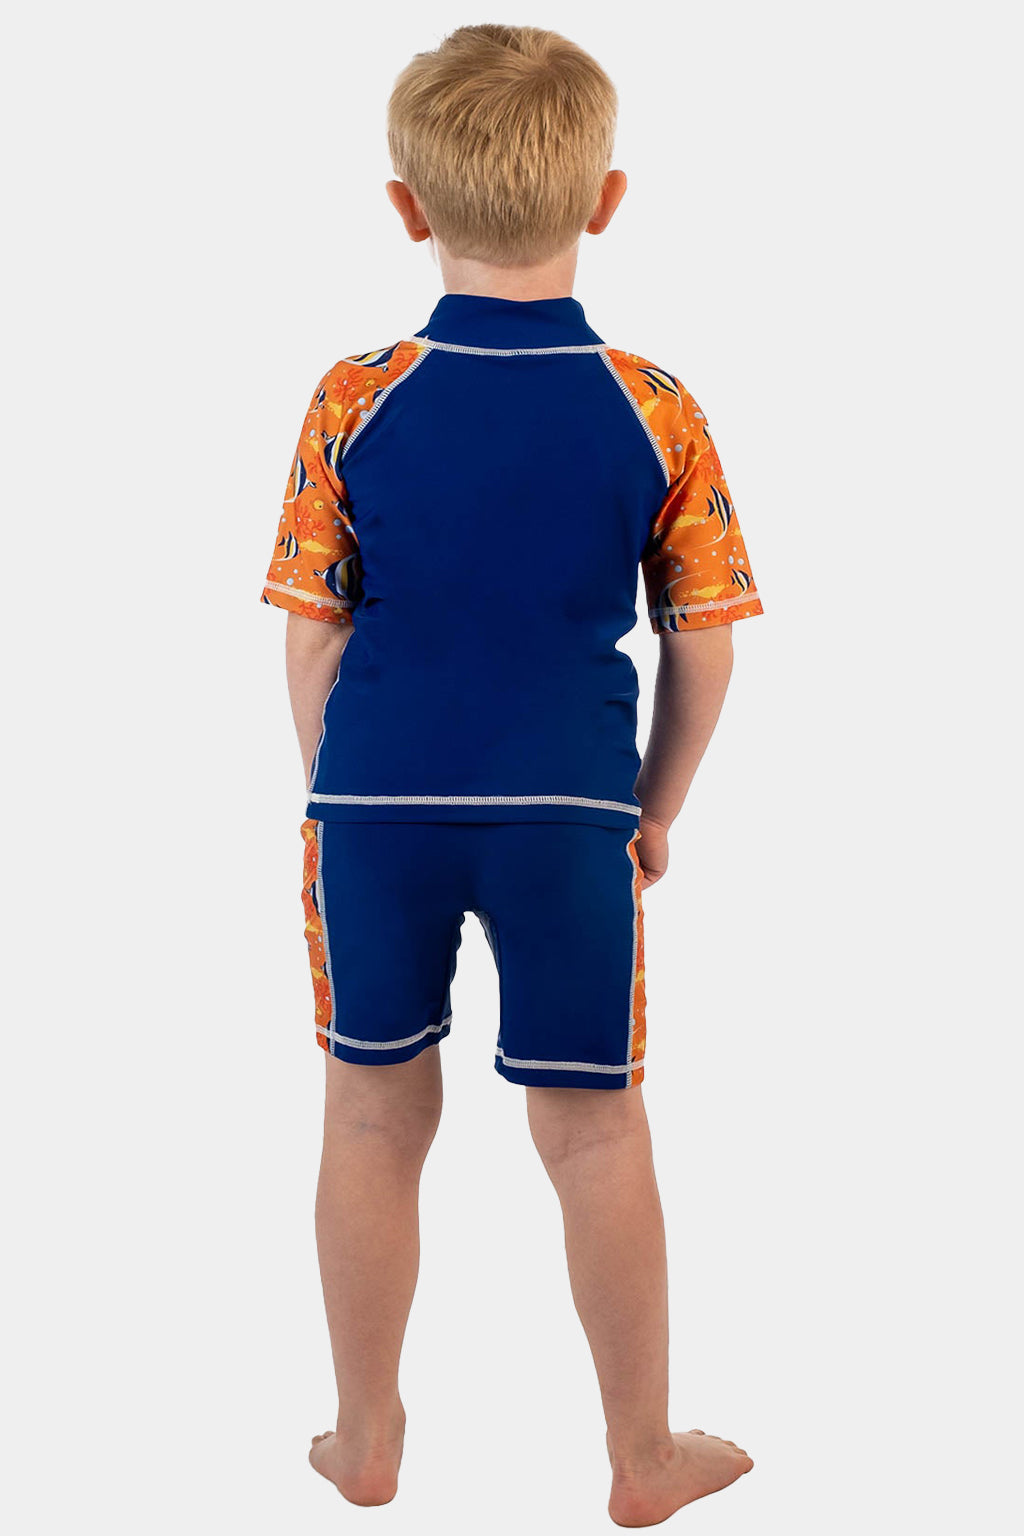 Coega - Boys Kids Swim Suit Two Piece